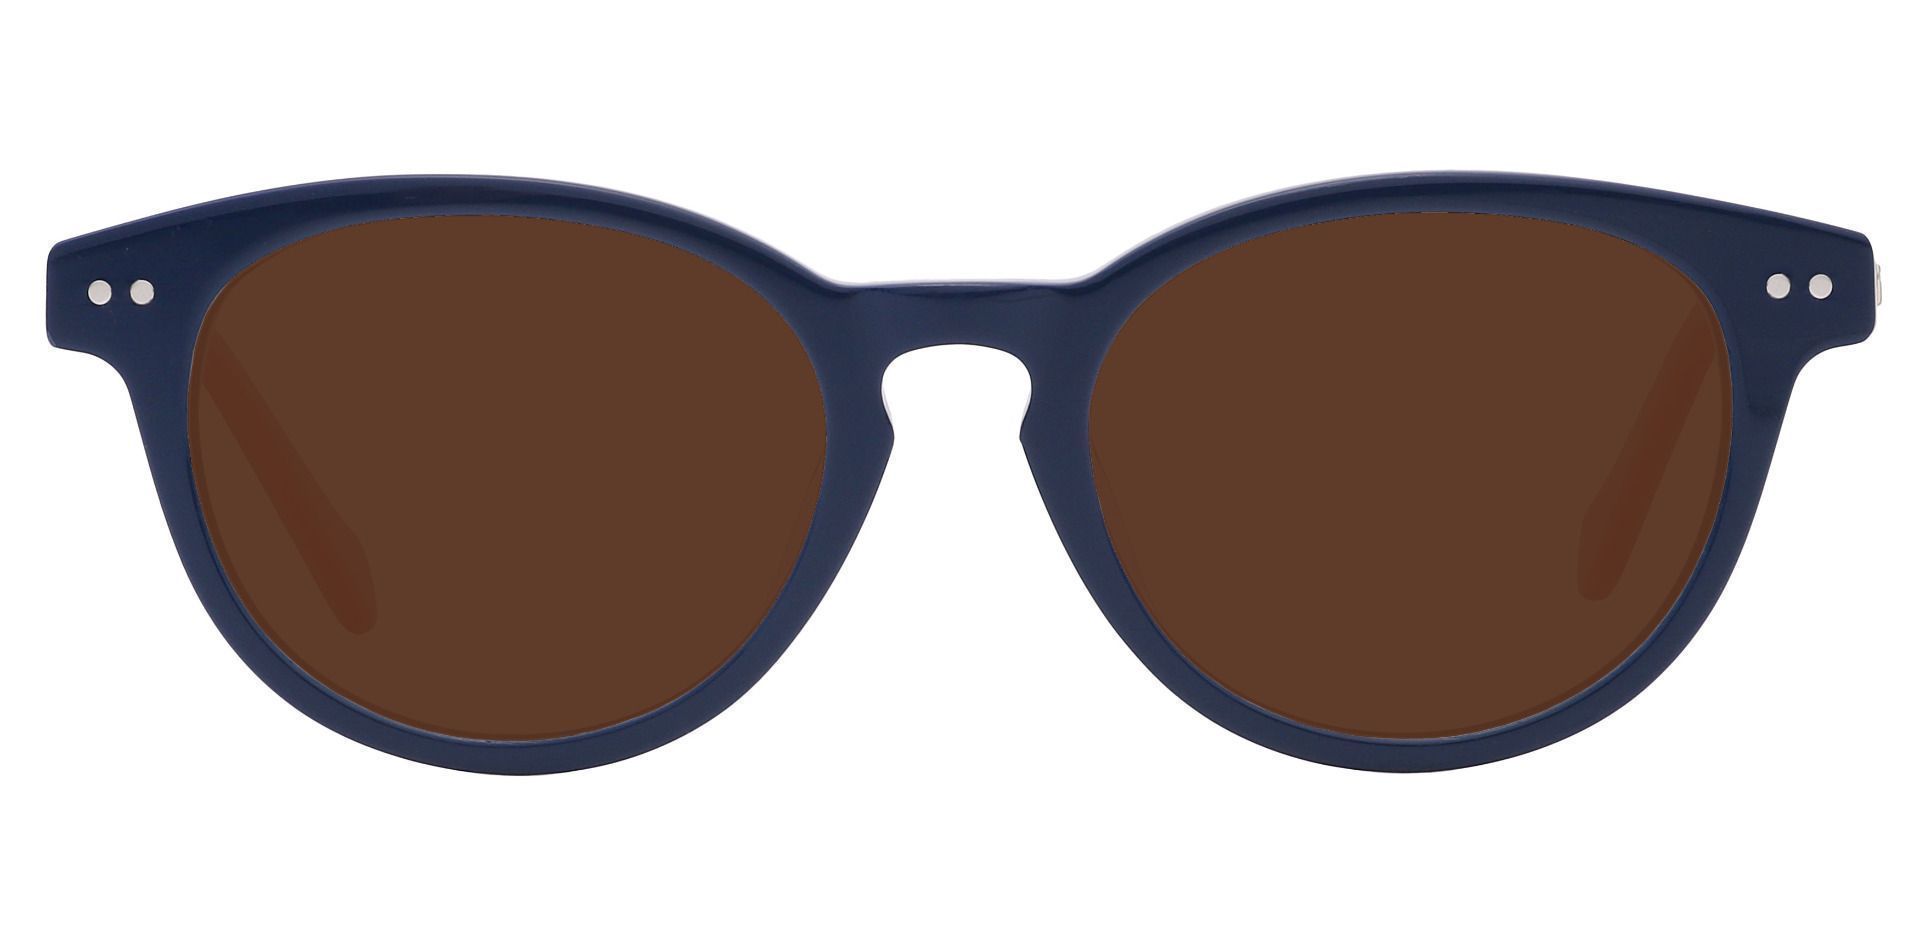 Revere Oval Reading Sunglasses - Blue Frame With Brown Lenses